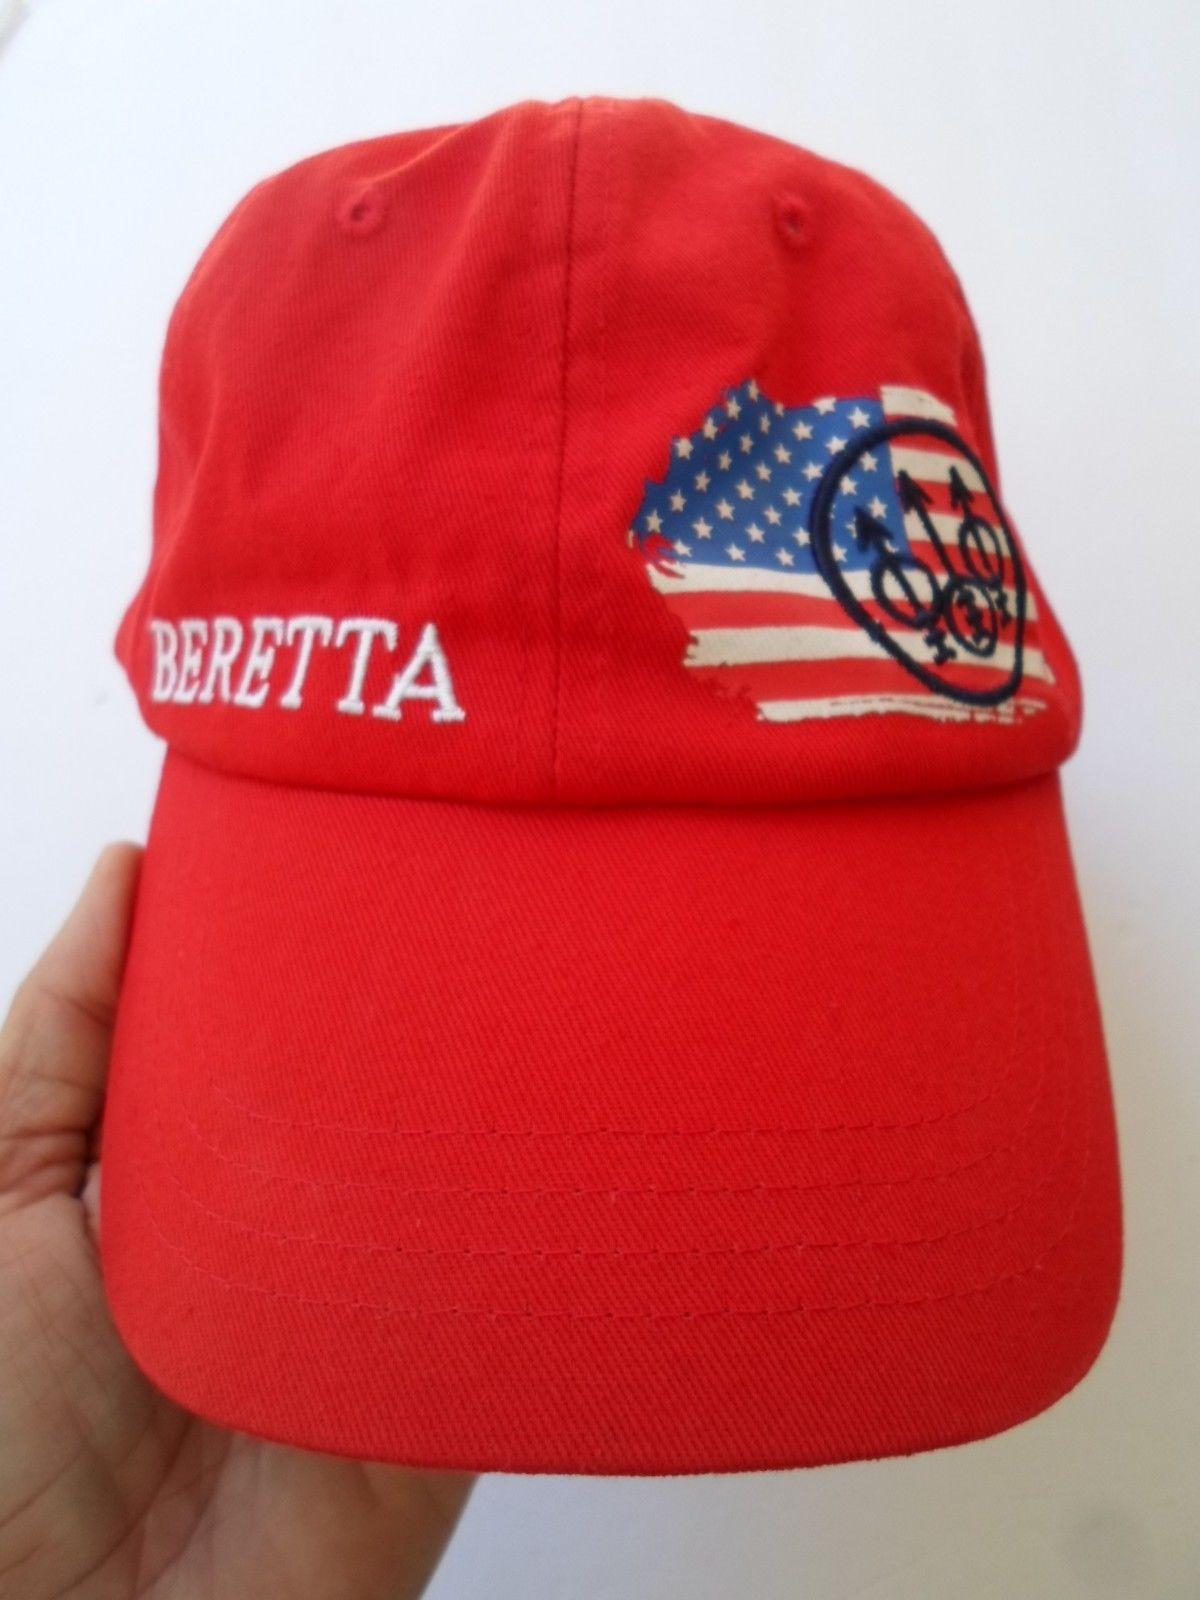 Red Trident Logo - BERETTA RED TRIDENT LOGO ADJUSTABLE BASEBALL HAT CAP RED BERETTA USA ...